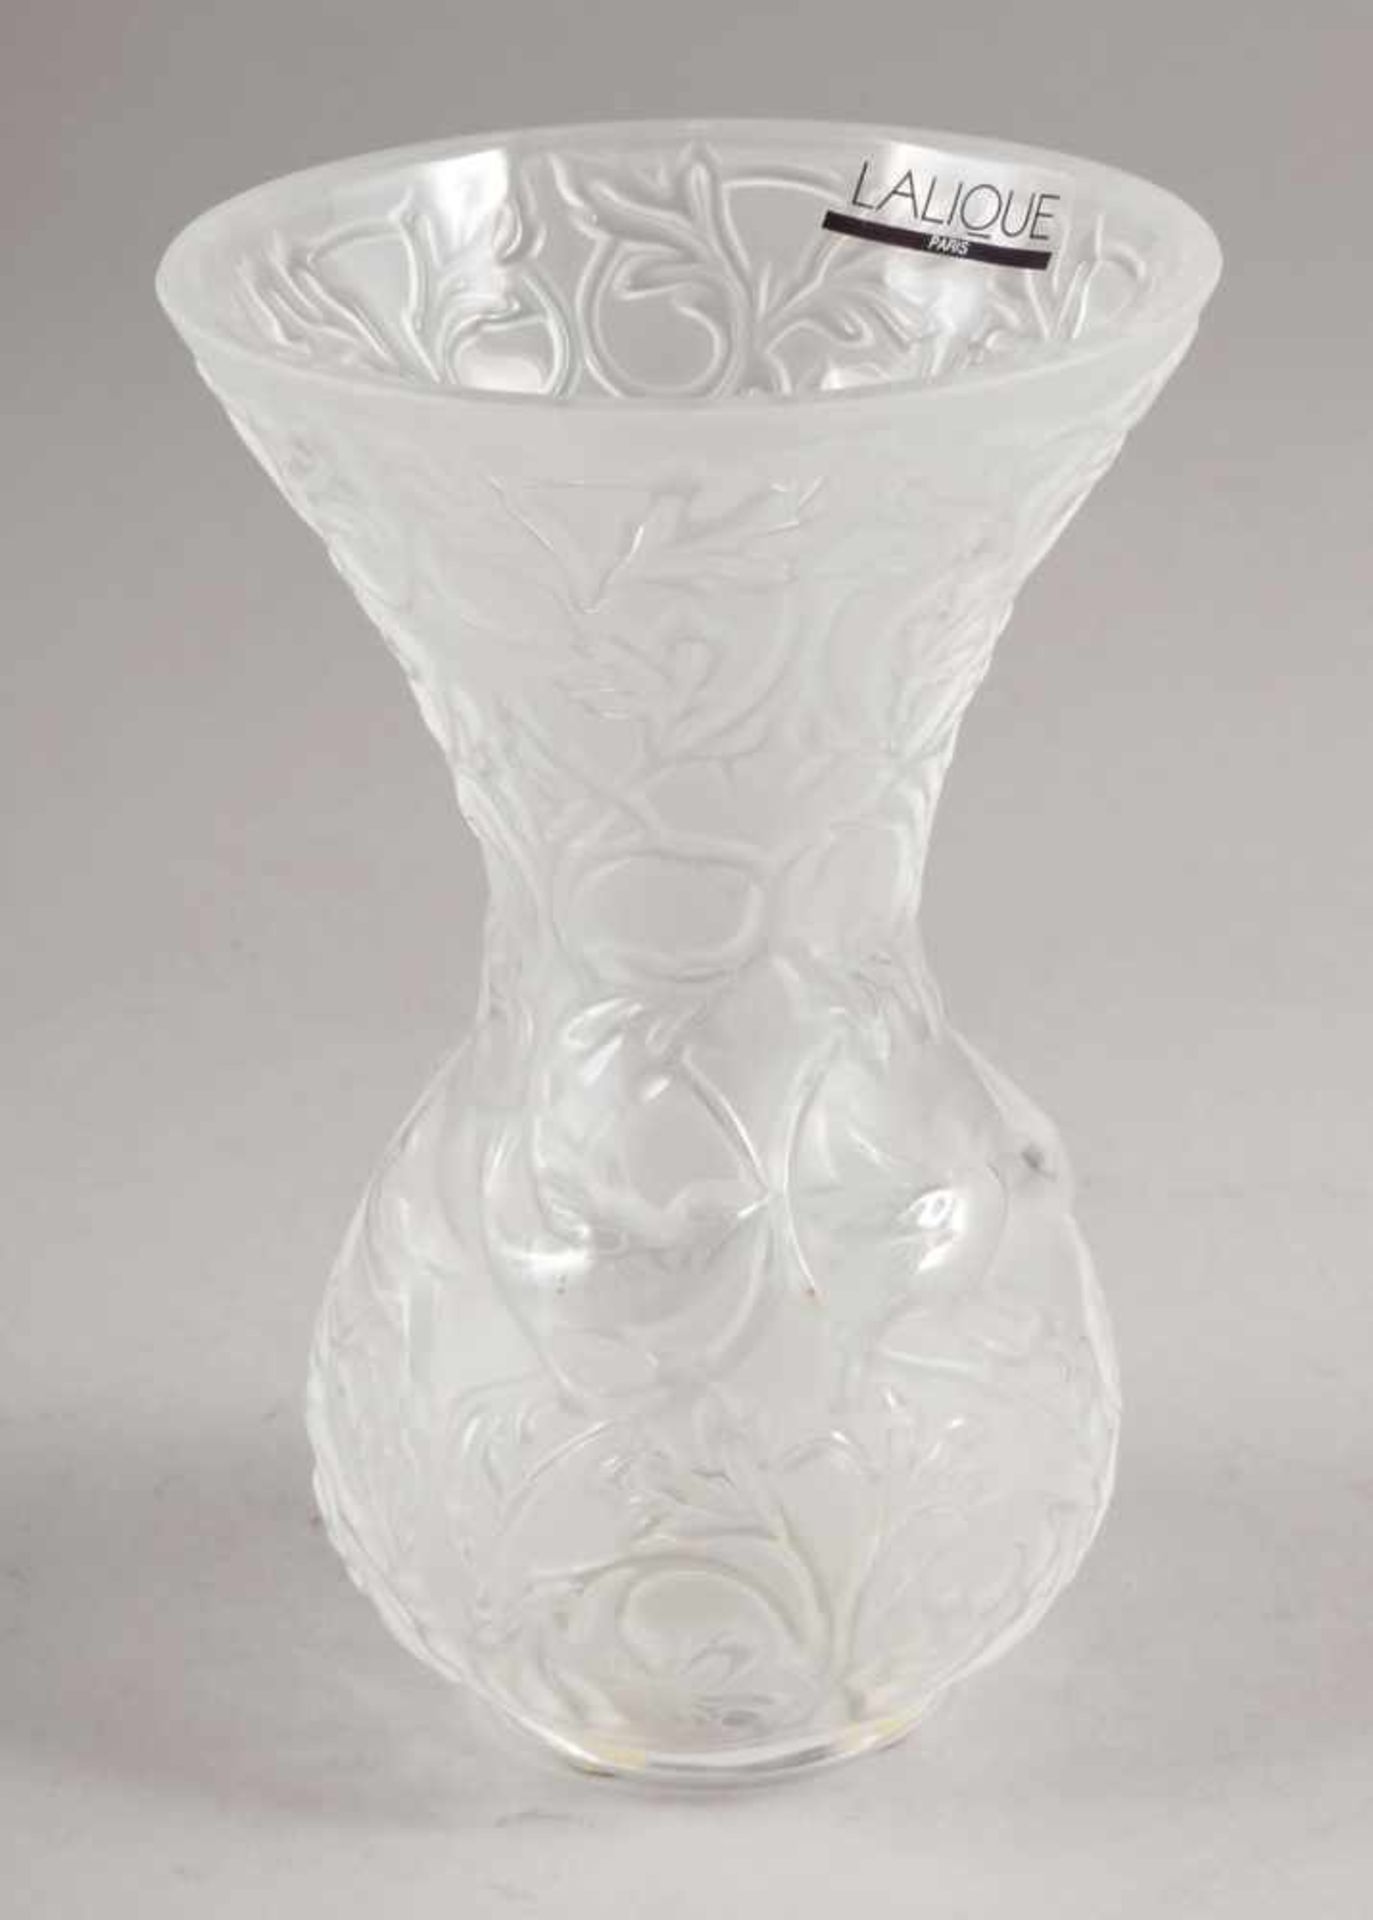 Vase - Arabesque incoloreLalique, Wingen-sur-Moder. Farbloses Glas, formgepresst, z. T. mattiert.